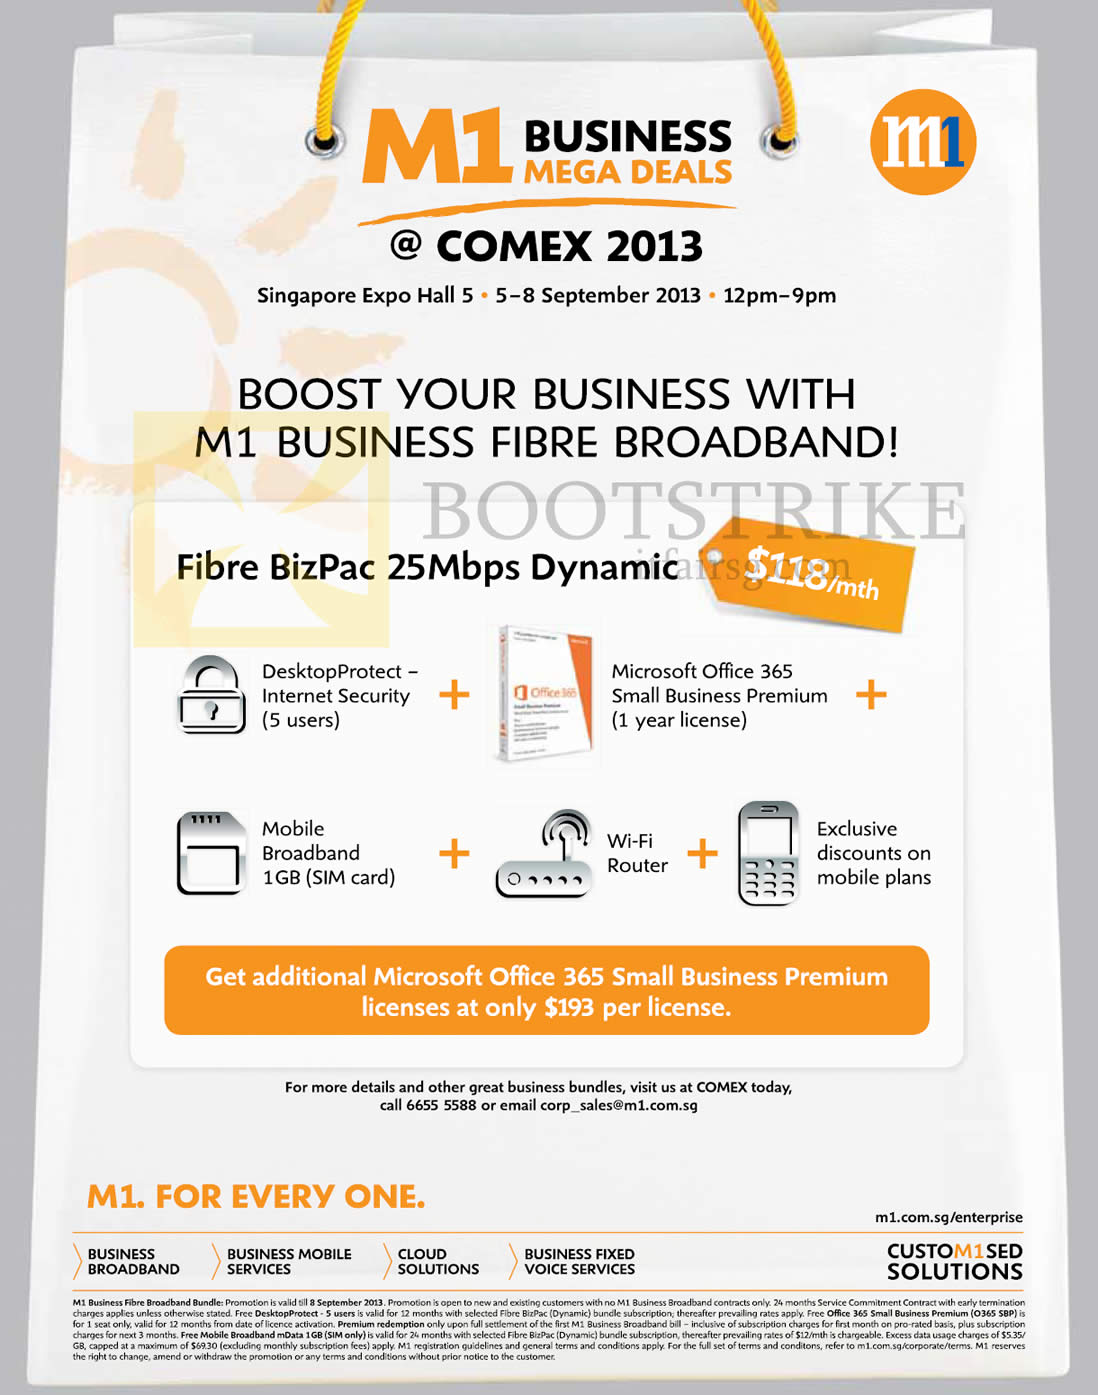 COMEX 2013 price list image brochure of M1 Business Fibre BizPac 25Mbps Dynamic, Microsoft Office 365